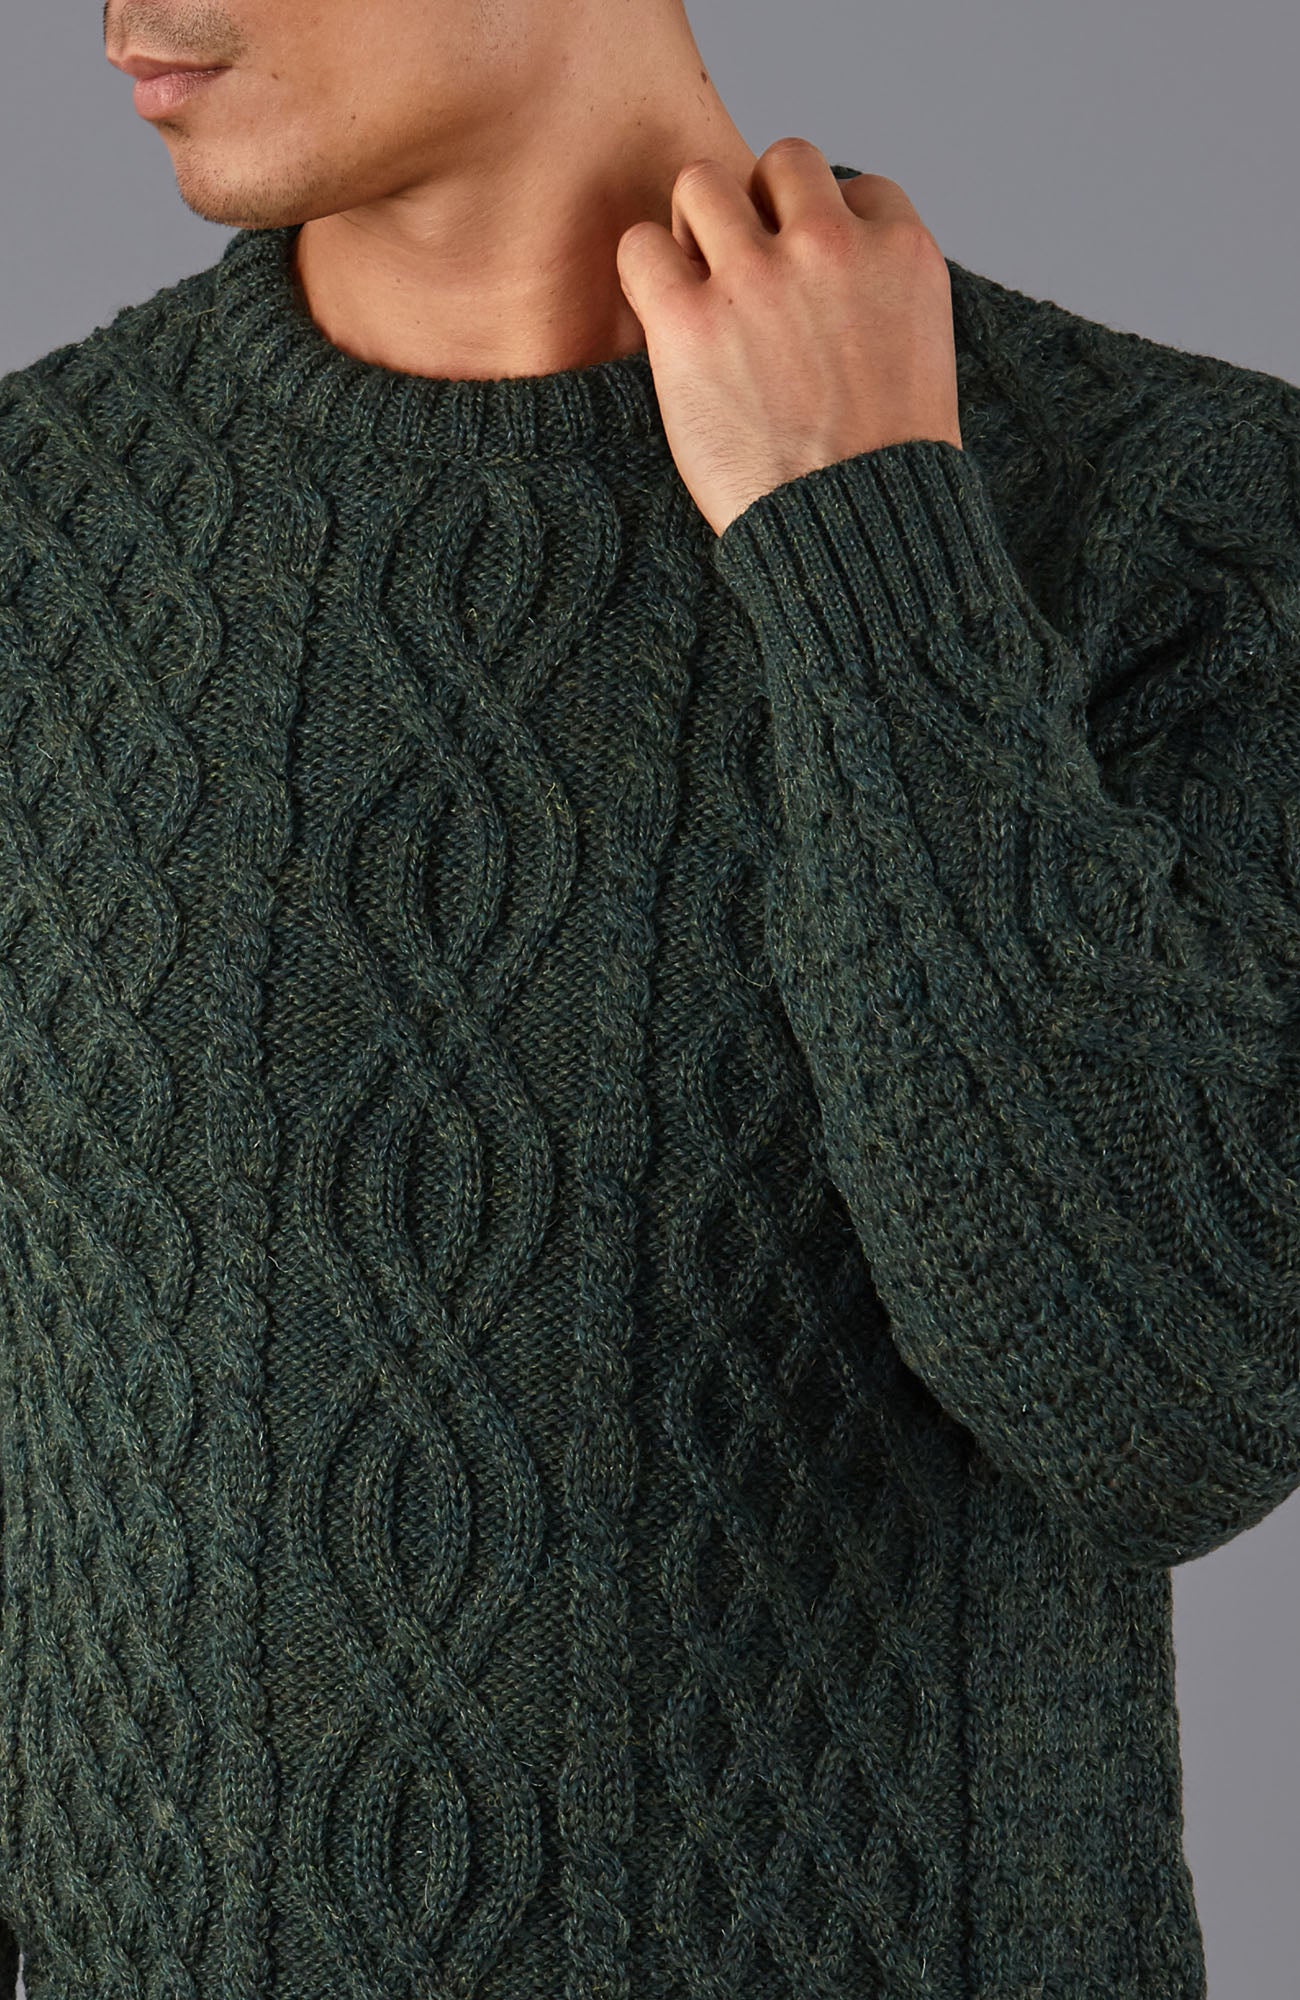 green mens wool jumper